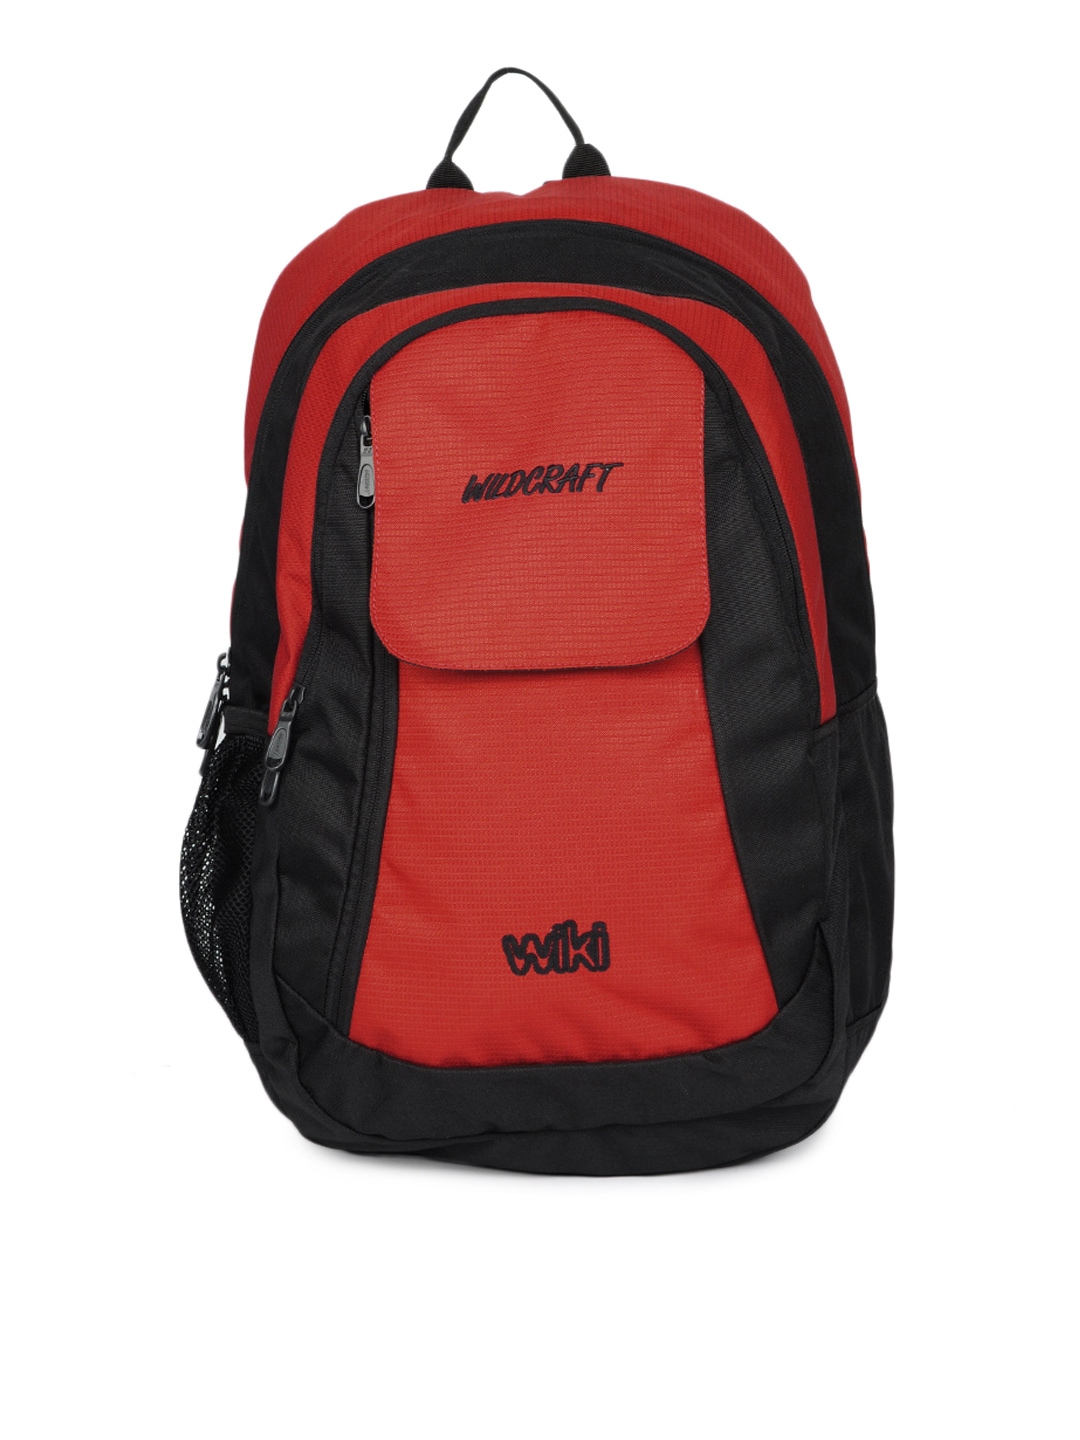 Wildcraft Unisex Red & Black Backpack